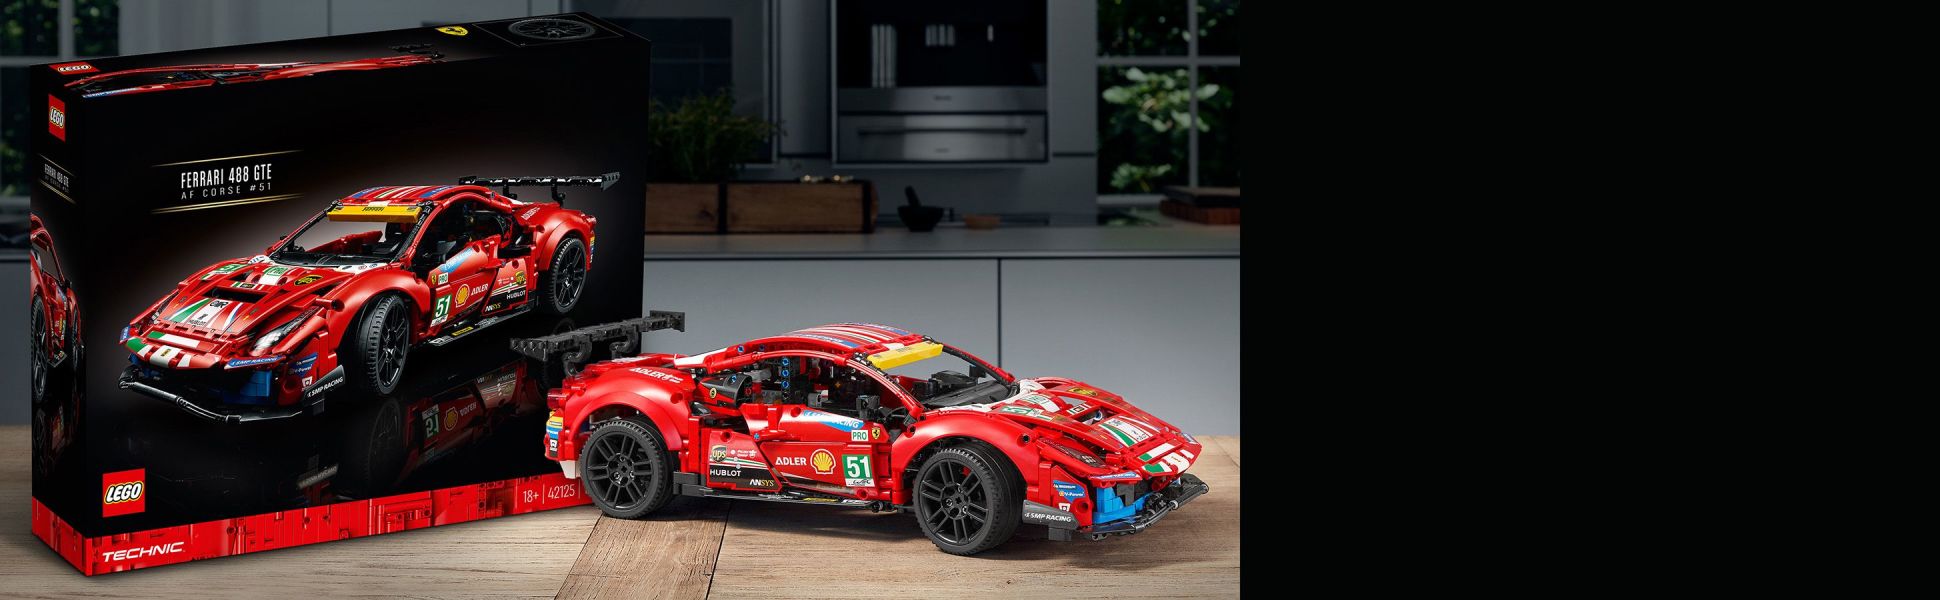 Brickfinder - LEGO Technic Ferrari 488 GTE (41425) Officially Announced!